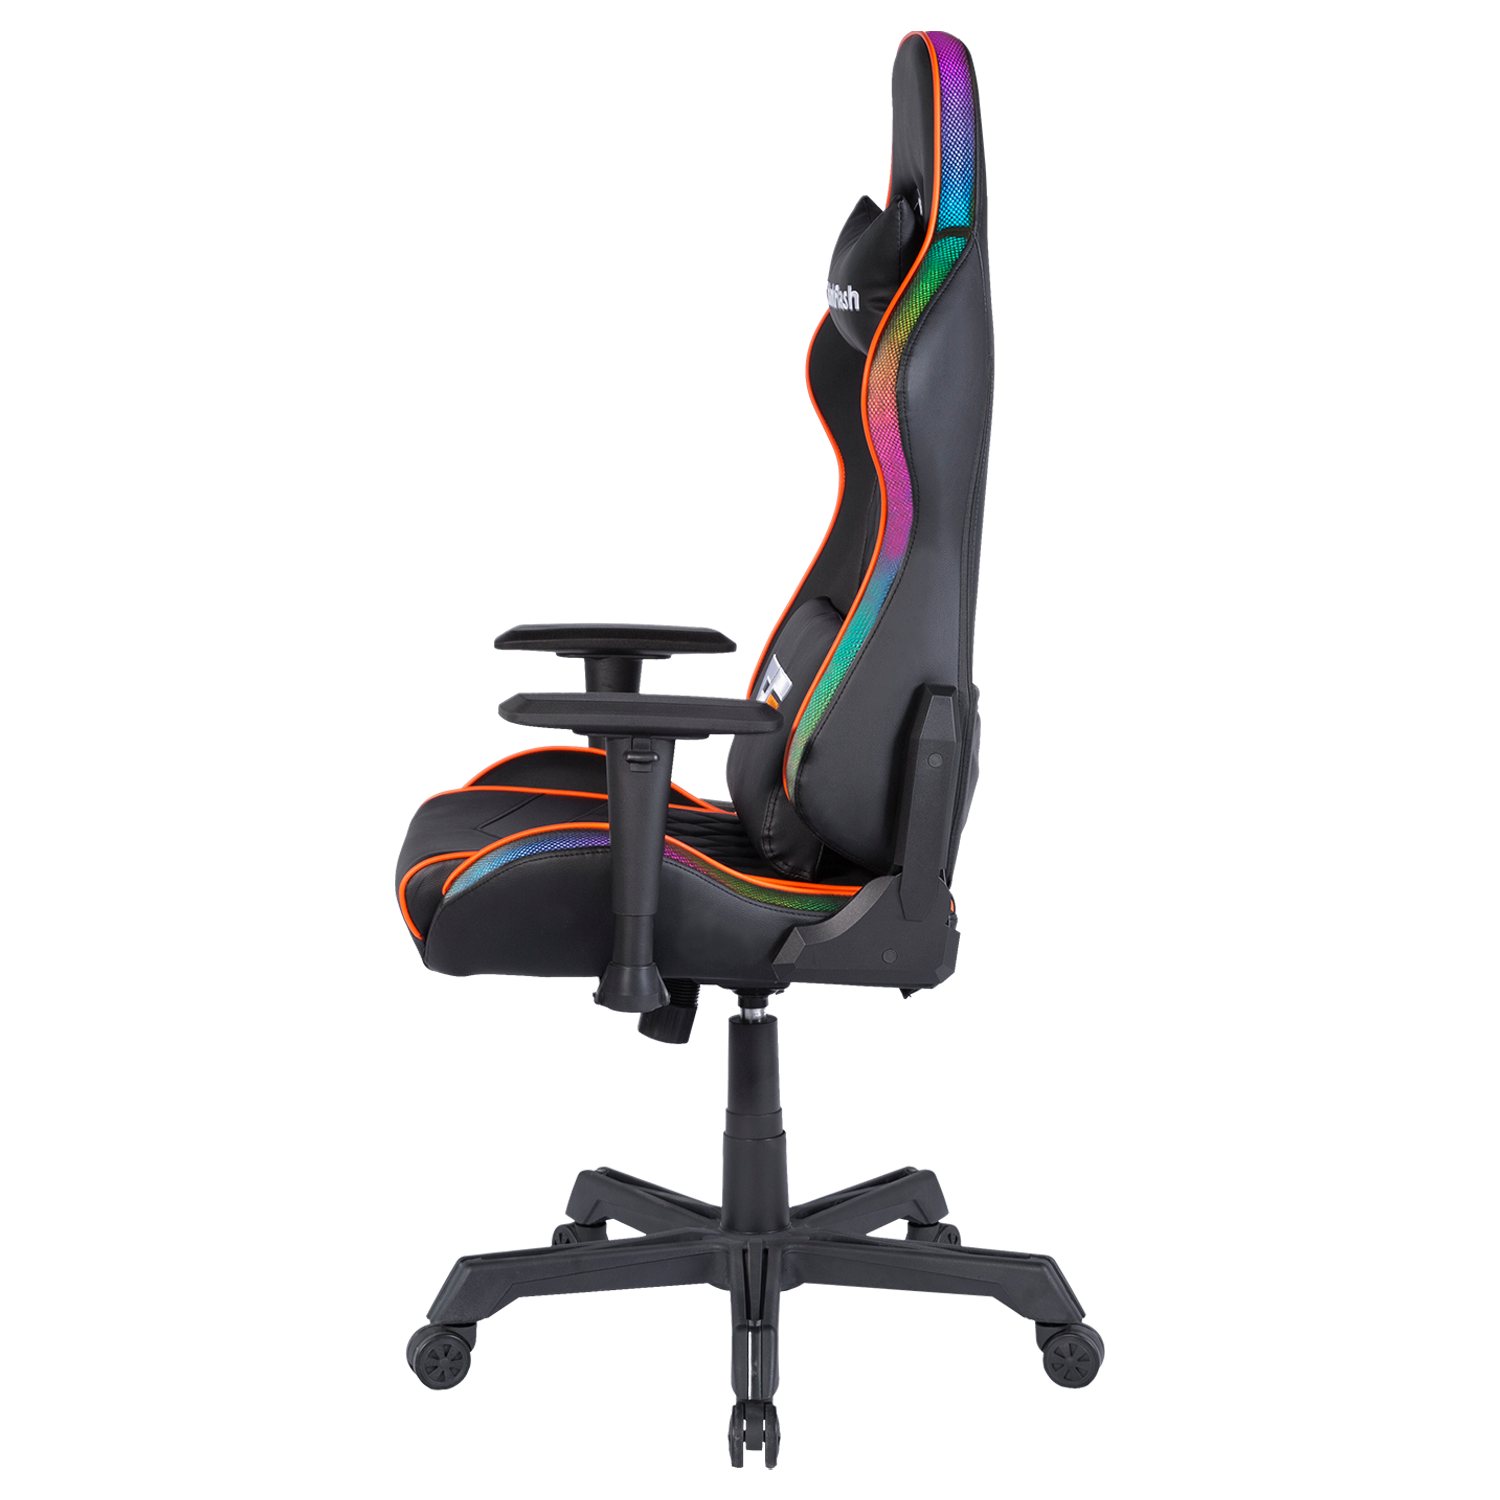 Cadeira Gamer Darkflash RC-650 RGB - Preto / Laranja